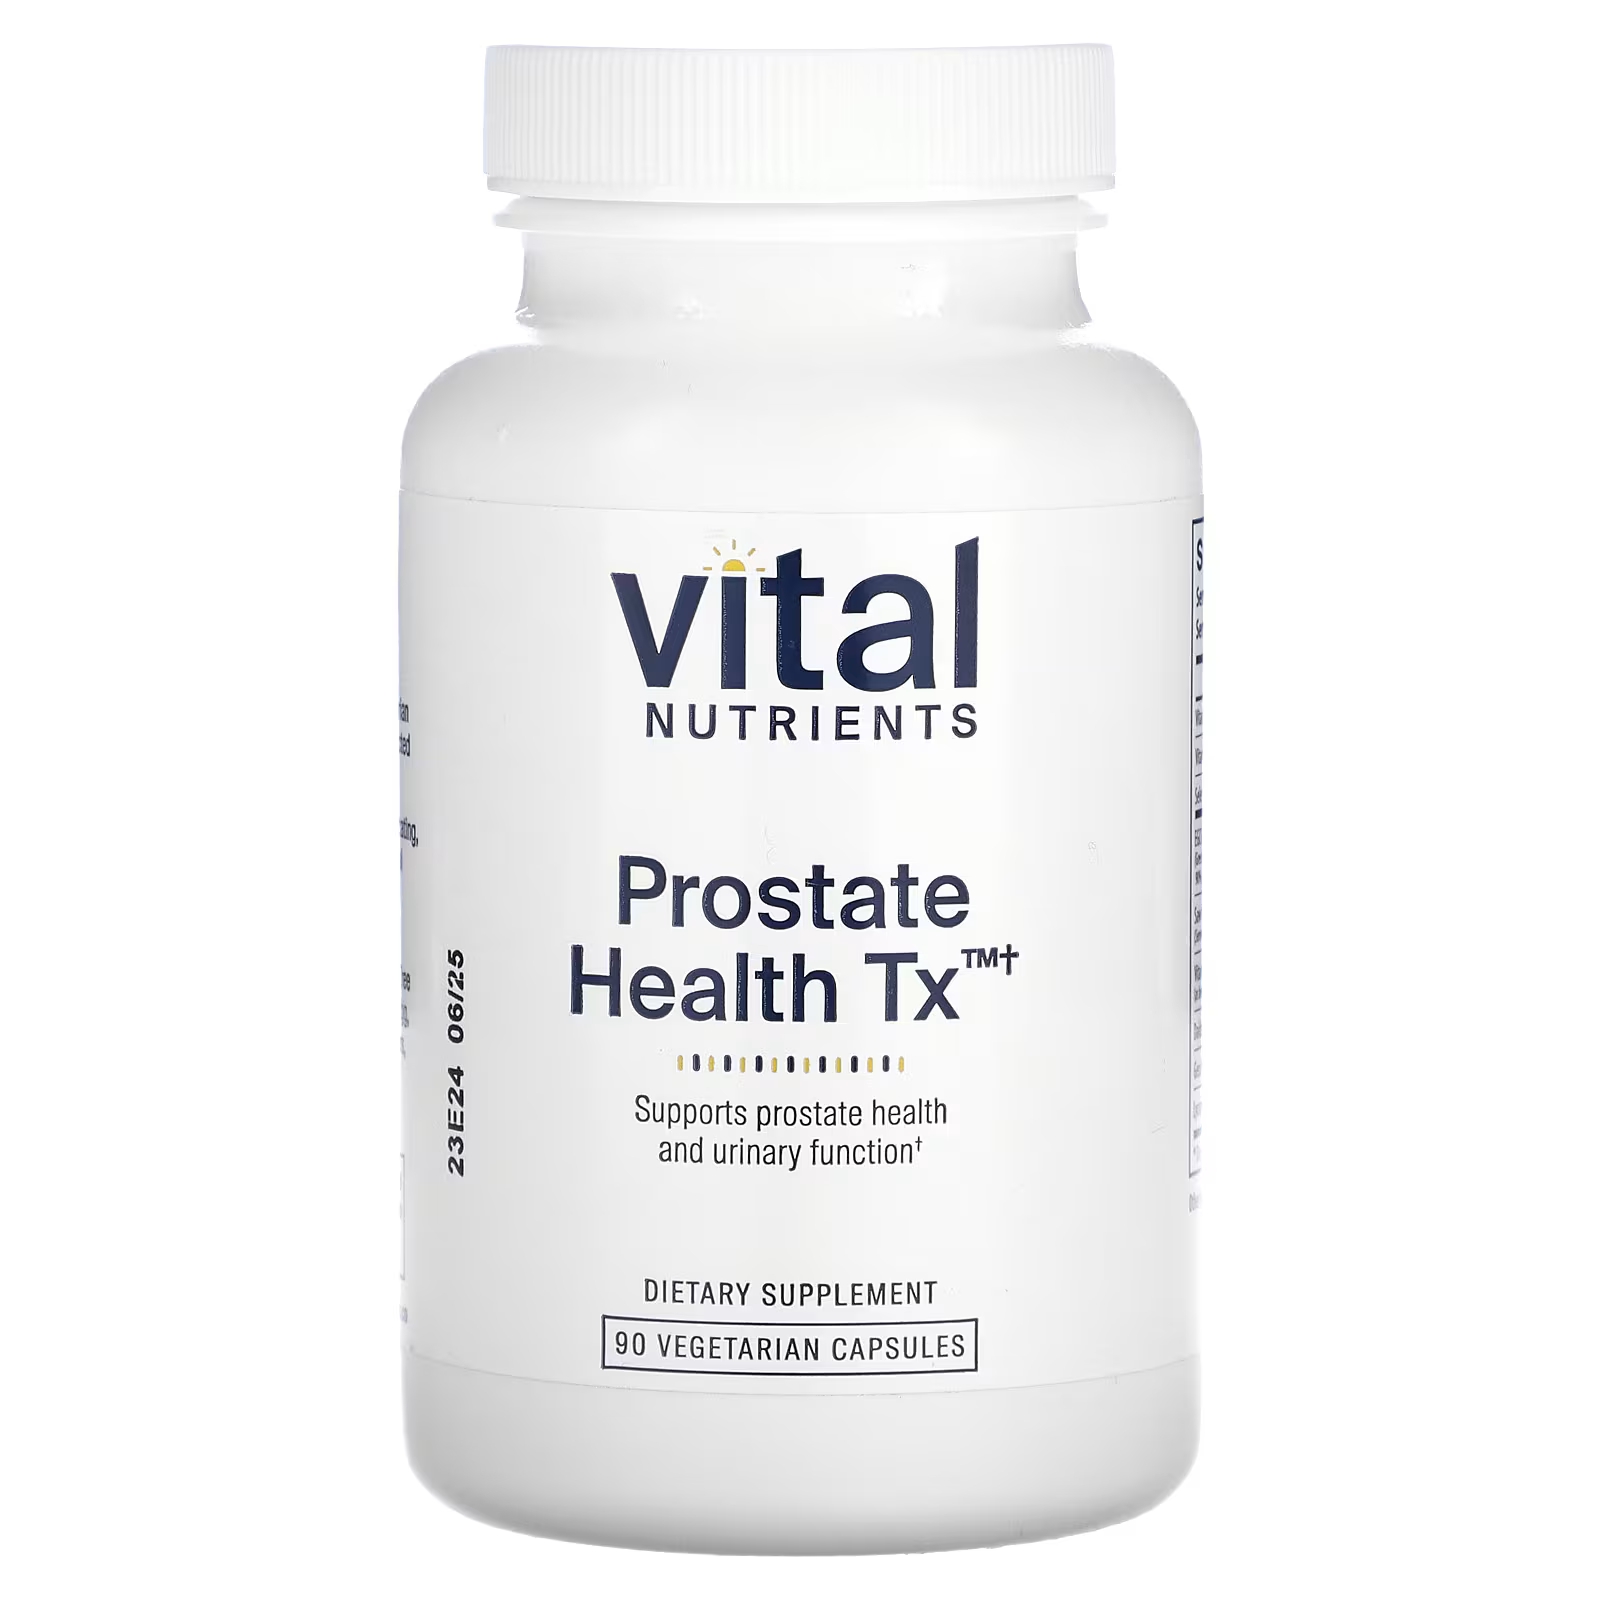 Пищевая добавка Vital Nutrients Prostate Health Tx, 90 капсул здоровье простаты tx 90 вегетарианских капсул vital nutrients